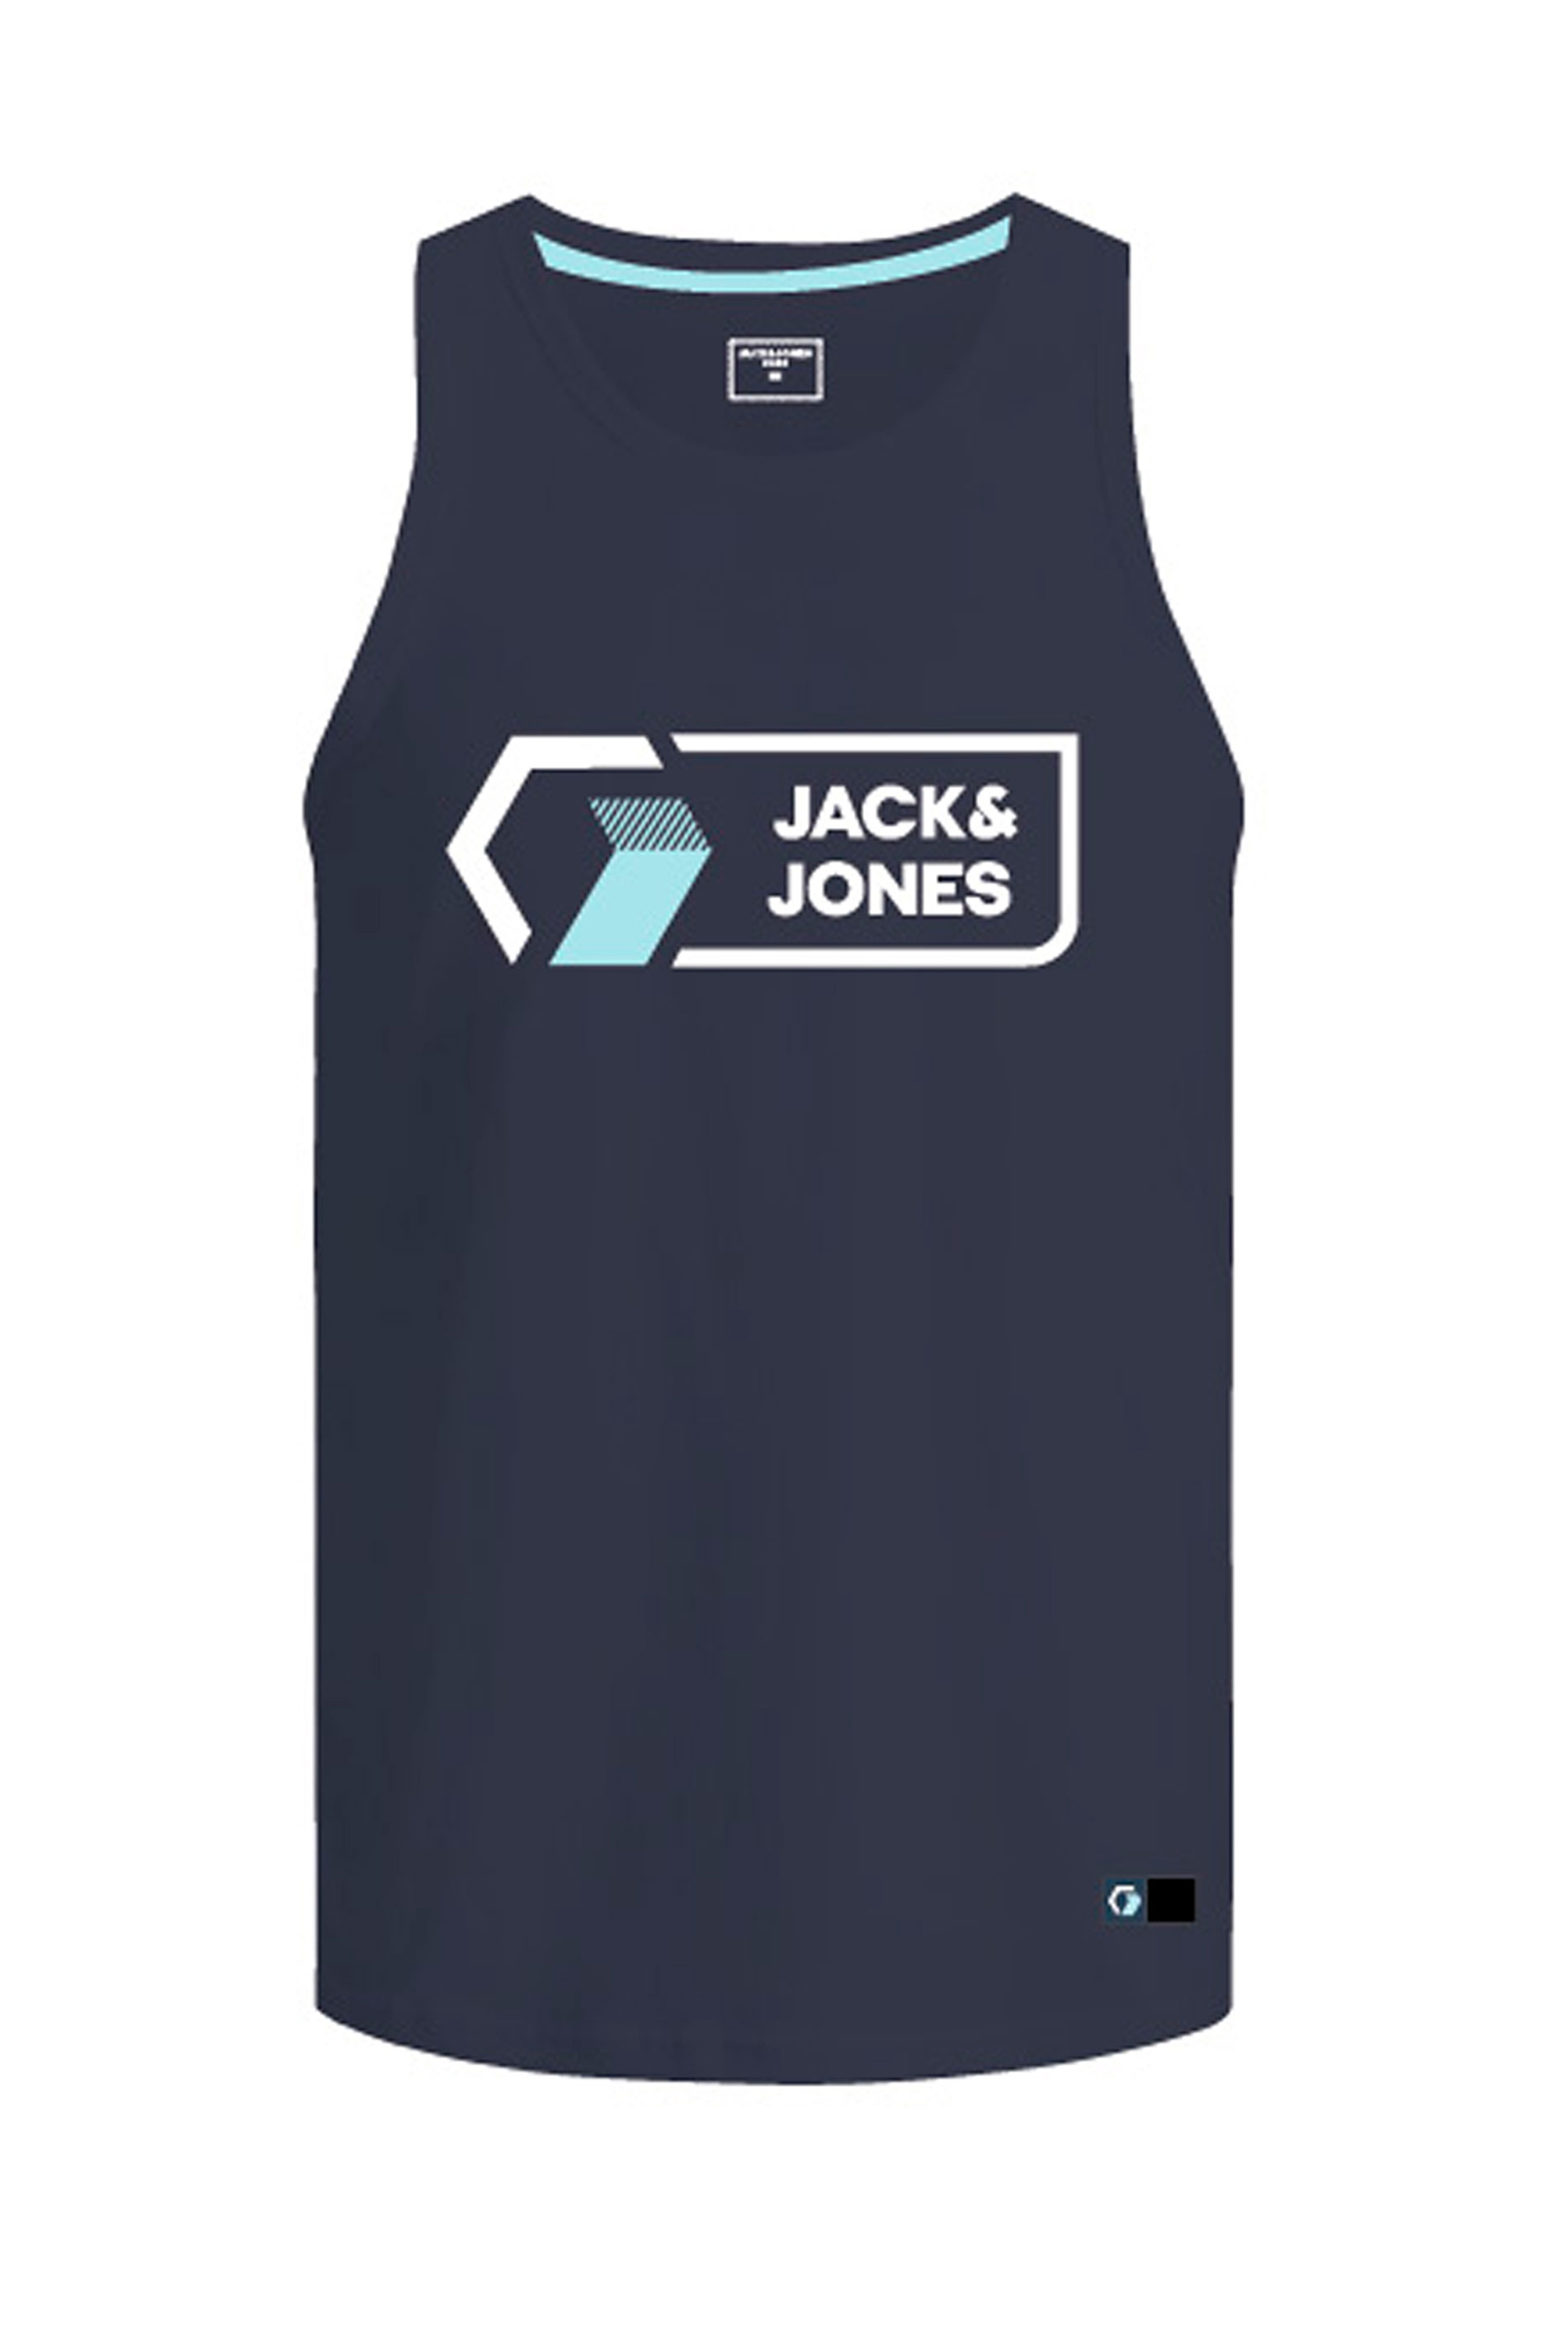 JACK & JONES Big & Tall Navy Blue Logo Vest_F.jpg